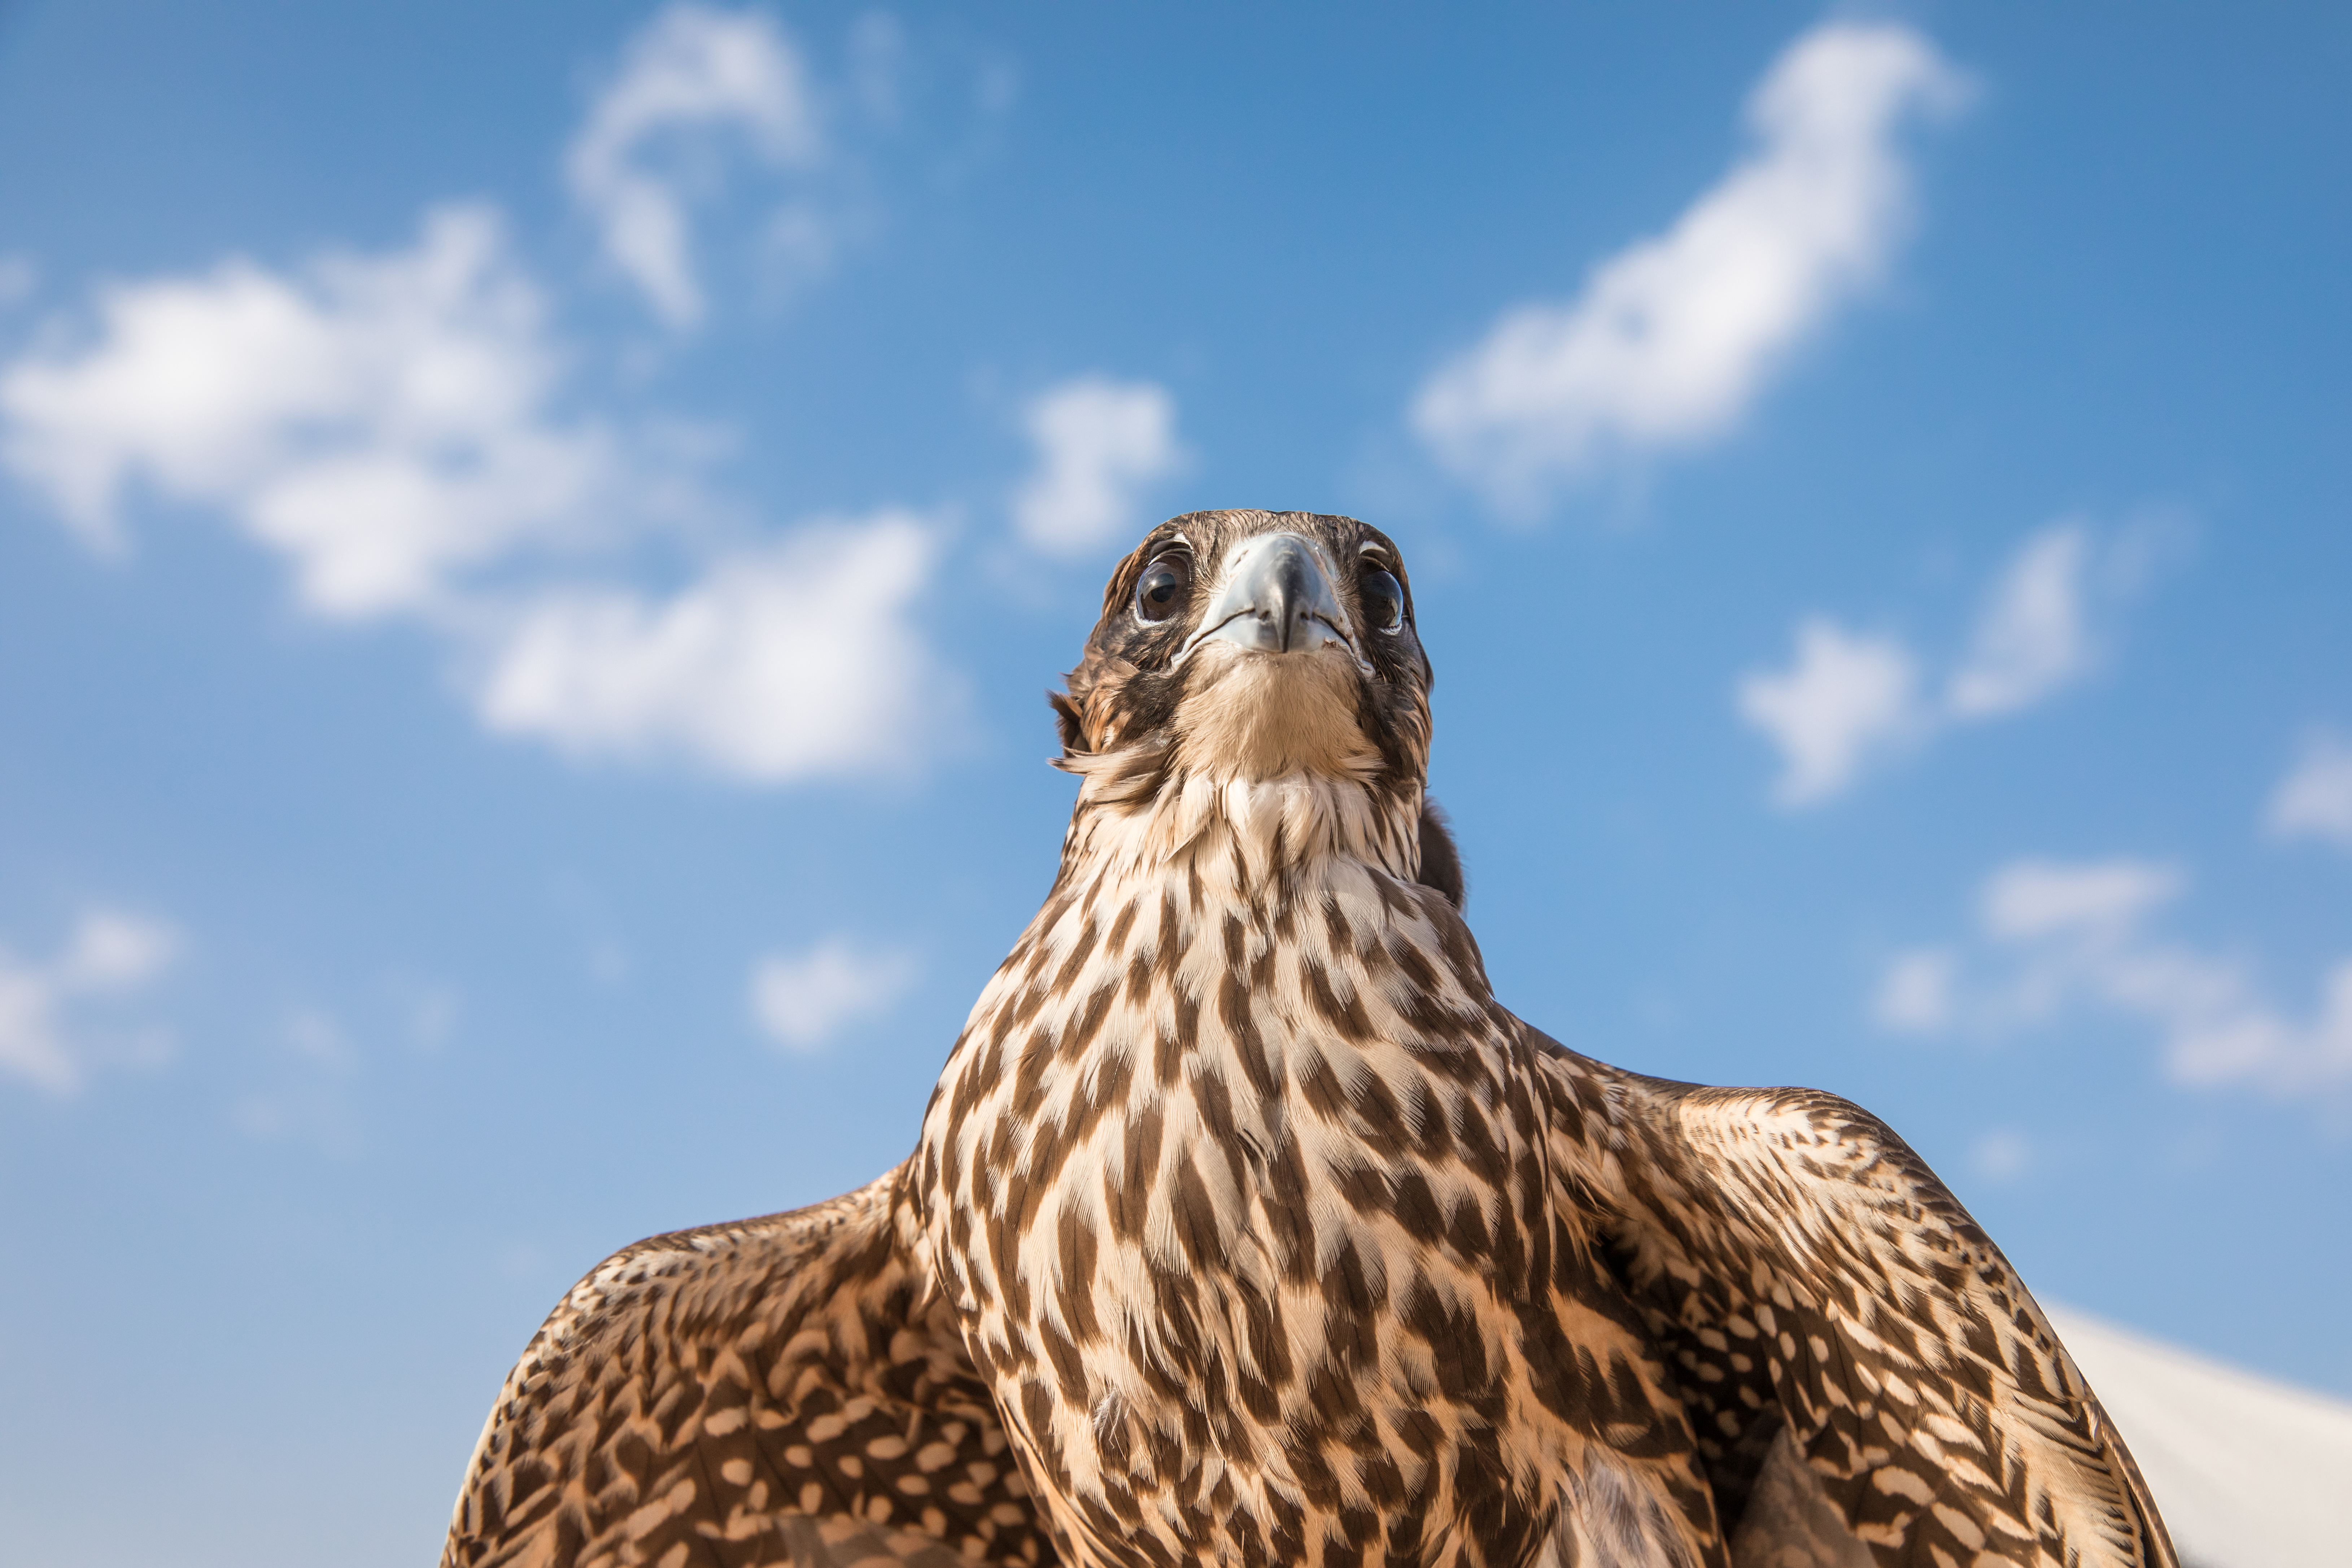 The Saker Falcon © Kertu / Shutterstock